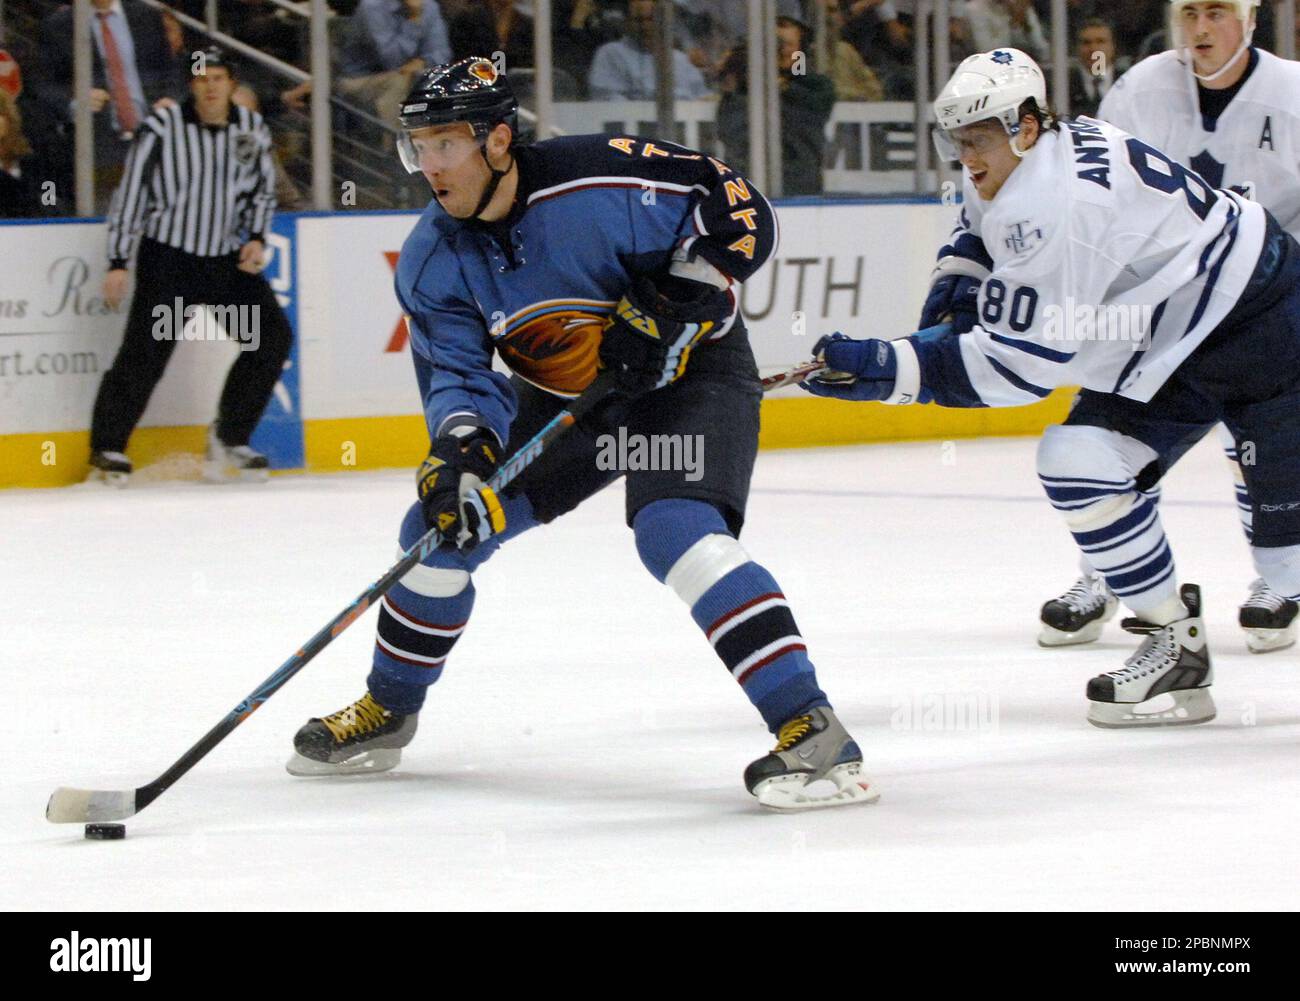 Kovalchuk's two goals help Thrashers beat Leafs